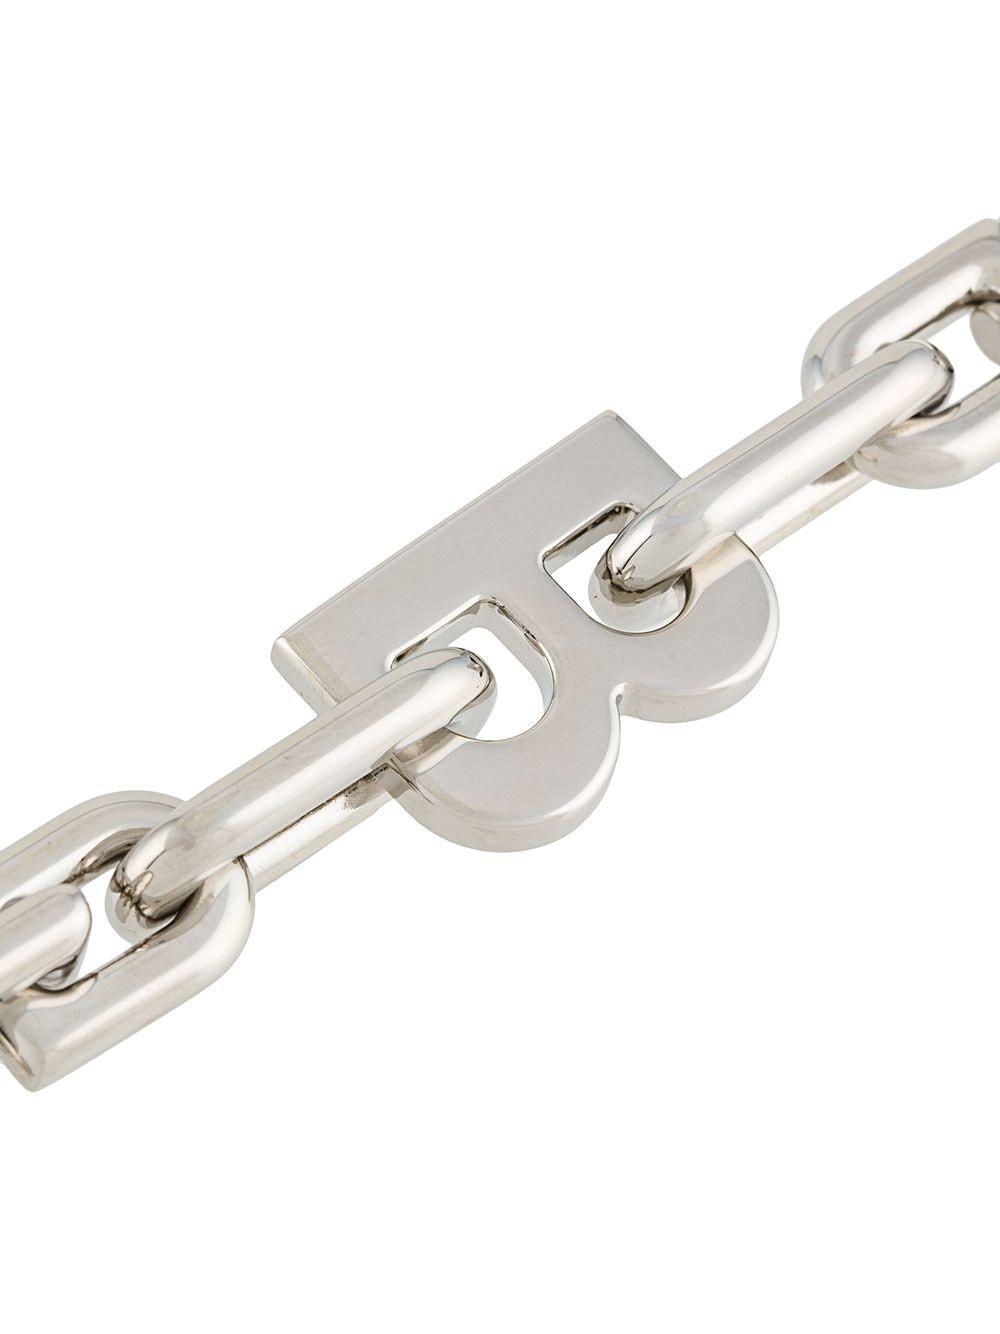 Balenciaga B Chain Bracelet in Silver (Metallic) for Men - Lyst